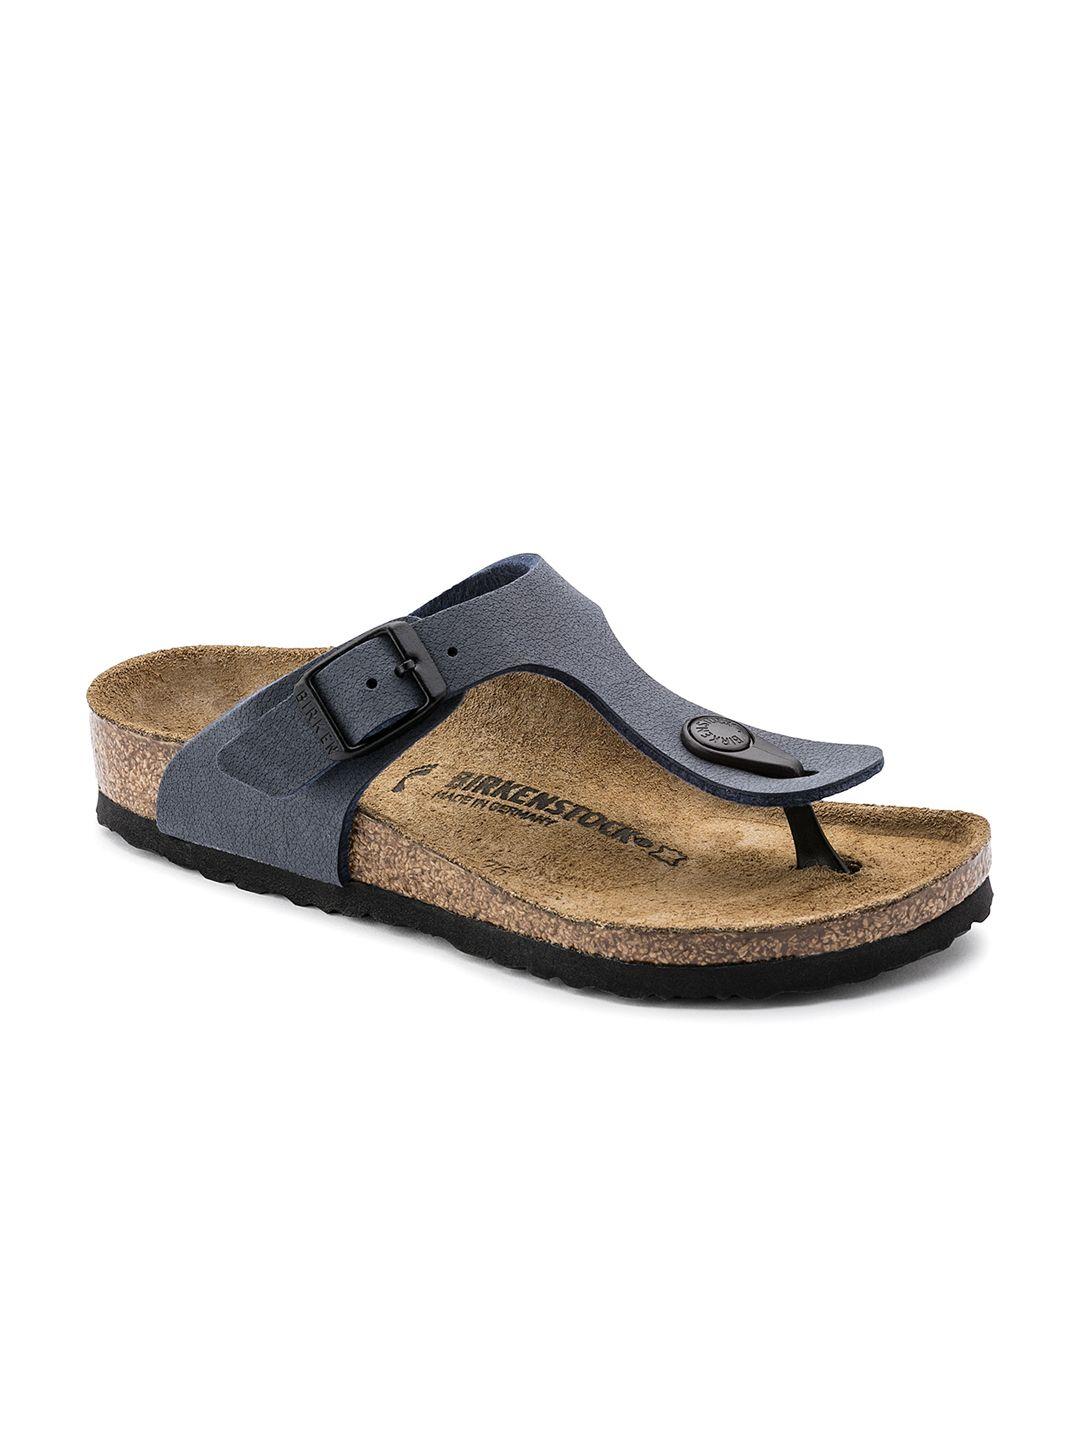 birkenstock-boys-blue-gizeh-birko-flor-nubuck-comfort-narrow-width-sandals